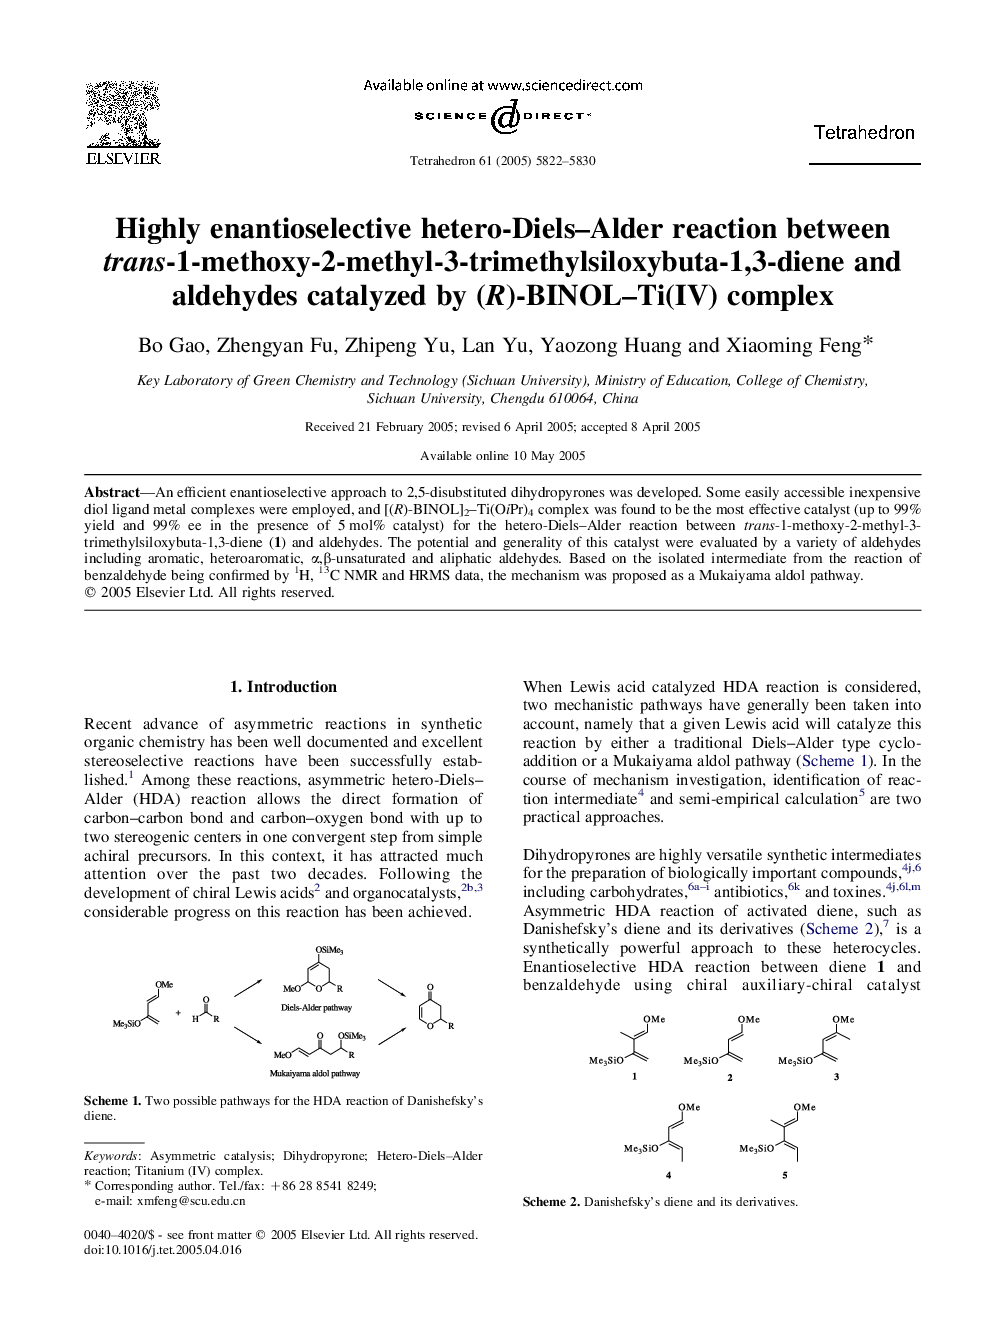 Highly enantioselective hetero-Diels-Alder reaction between trans-1-methoxy-2-methyl-3-trimethylsiloxybuta-1,3-diene and aldehydes catalyzed by (R)-BINOL-Ti(IV) complex